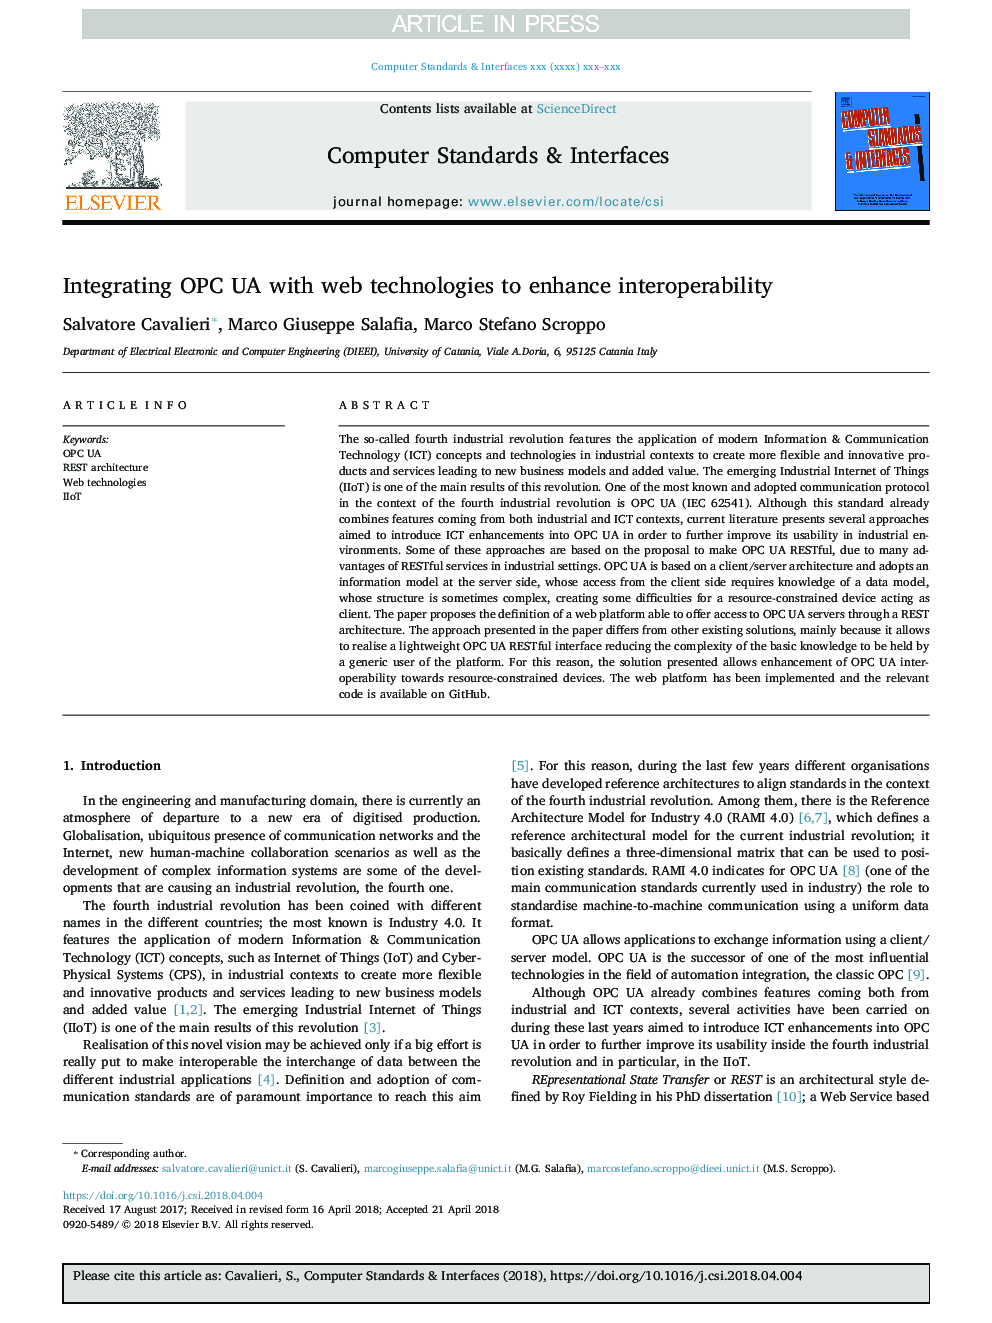 Integrating OPC UA with web technologies to enhance interoperability